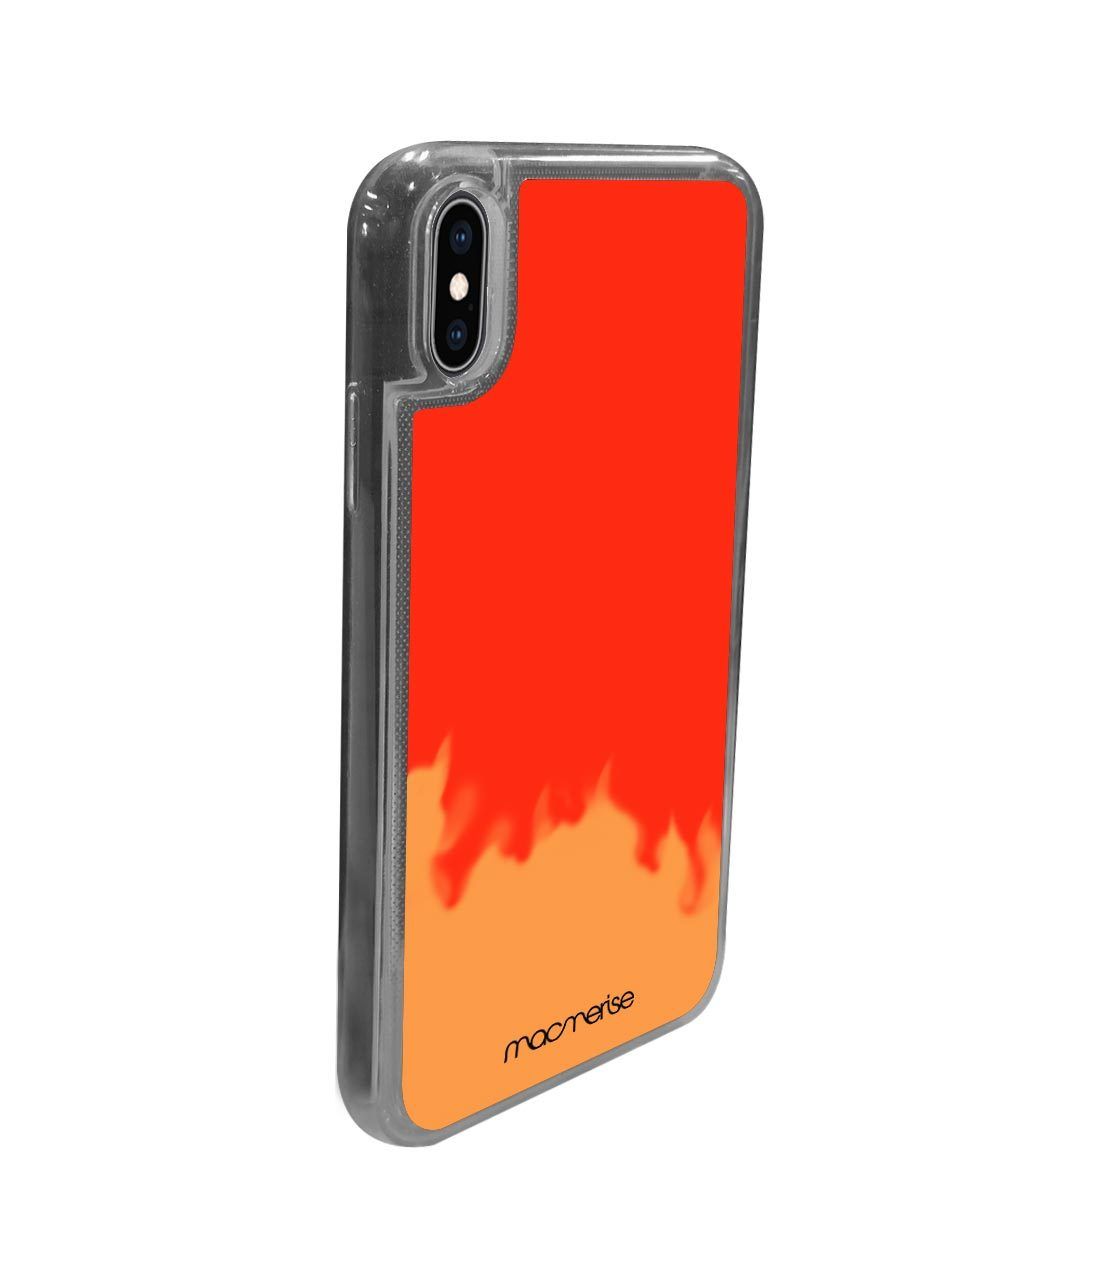 Neon Sand Orange - Neon Sand Phone Case for iPhone XS Max